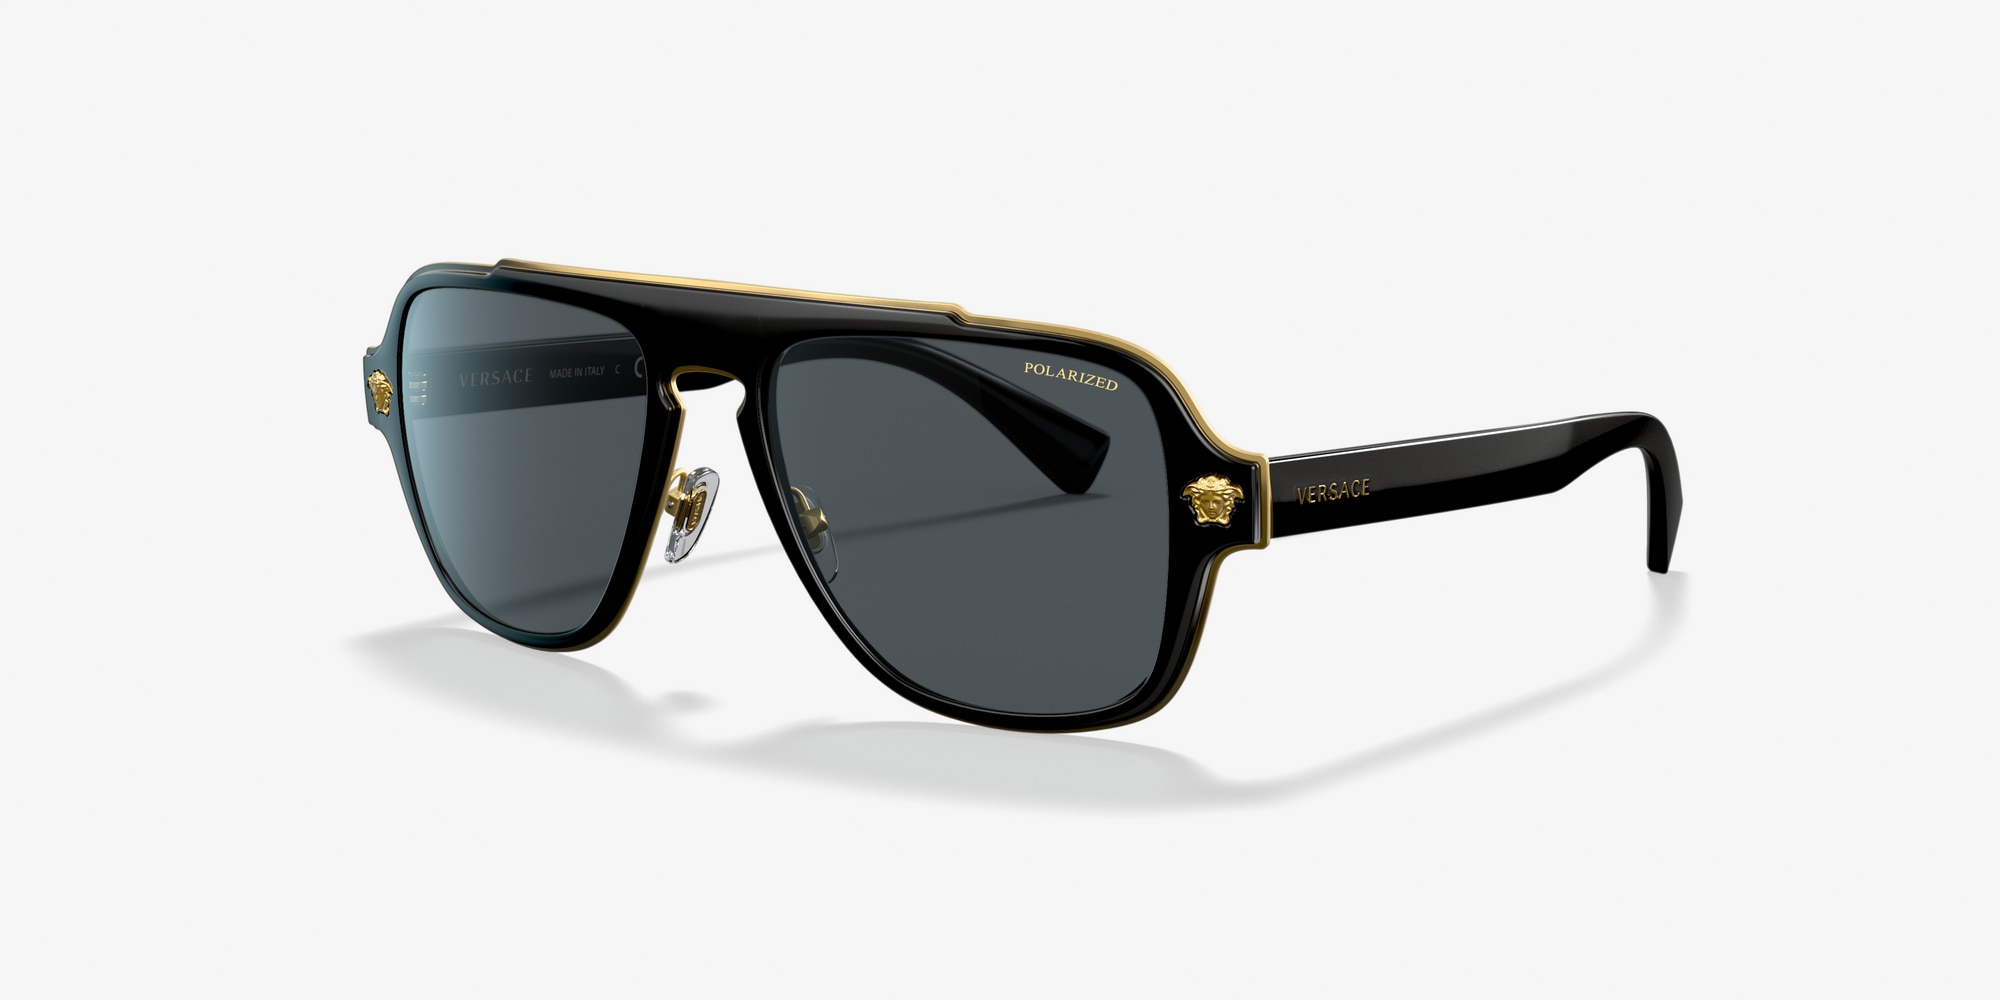 versace polarized men's sunglasses